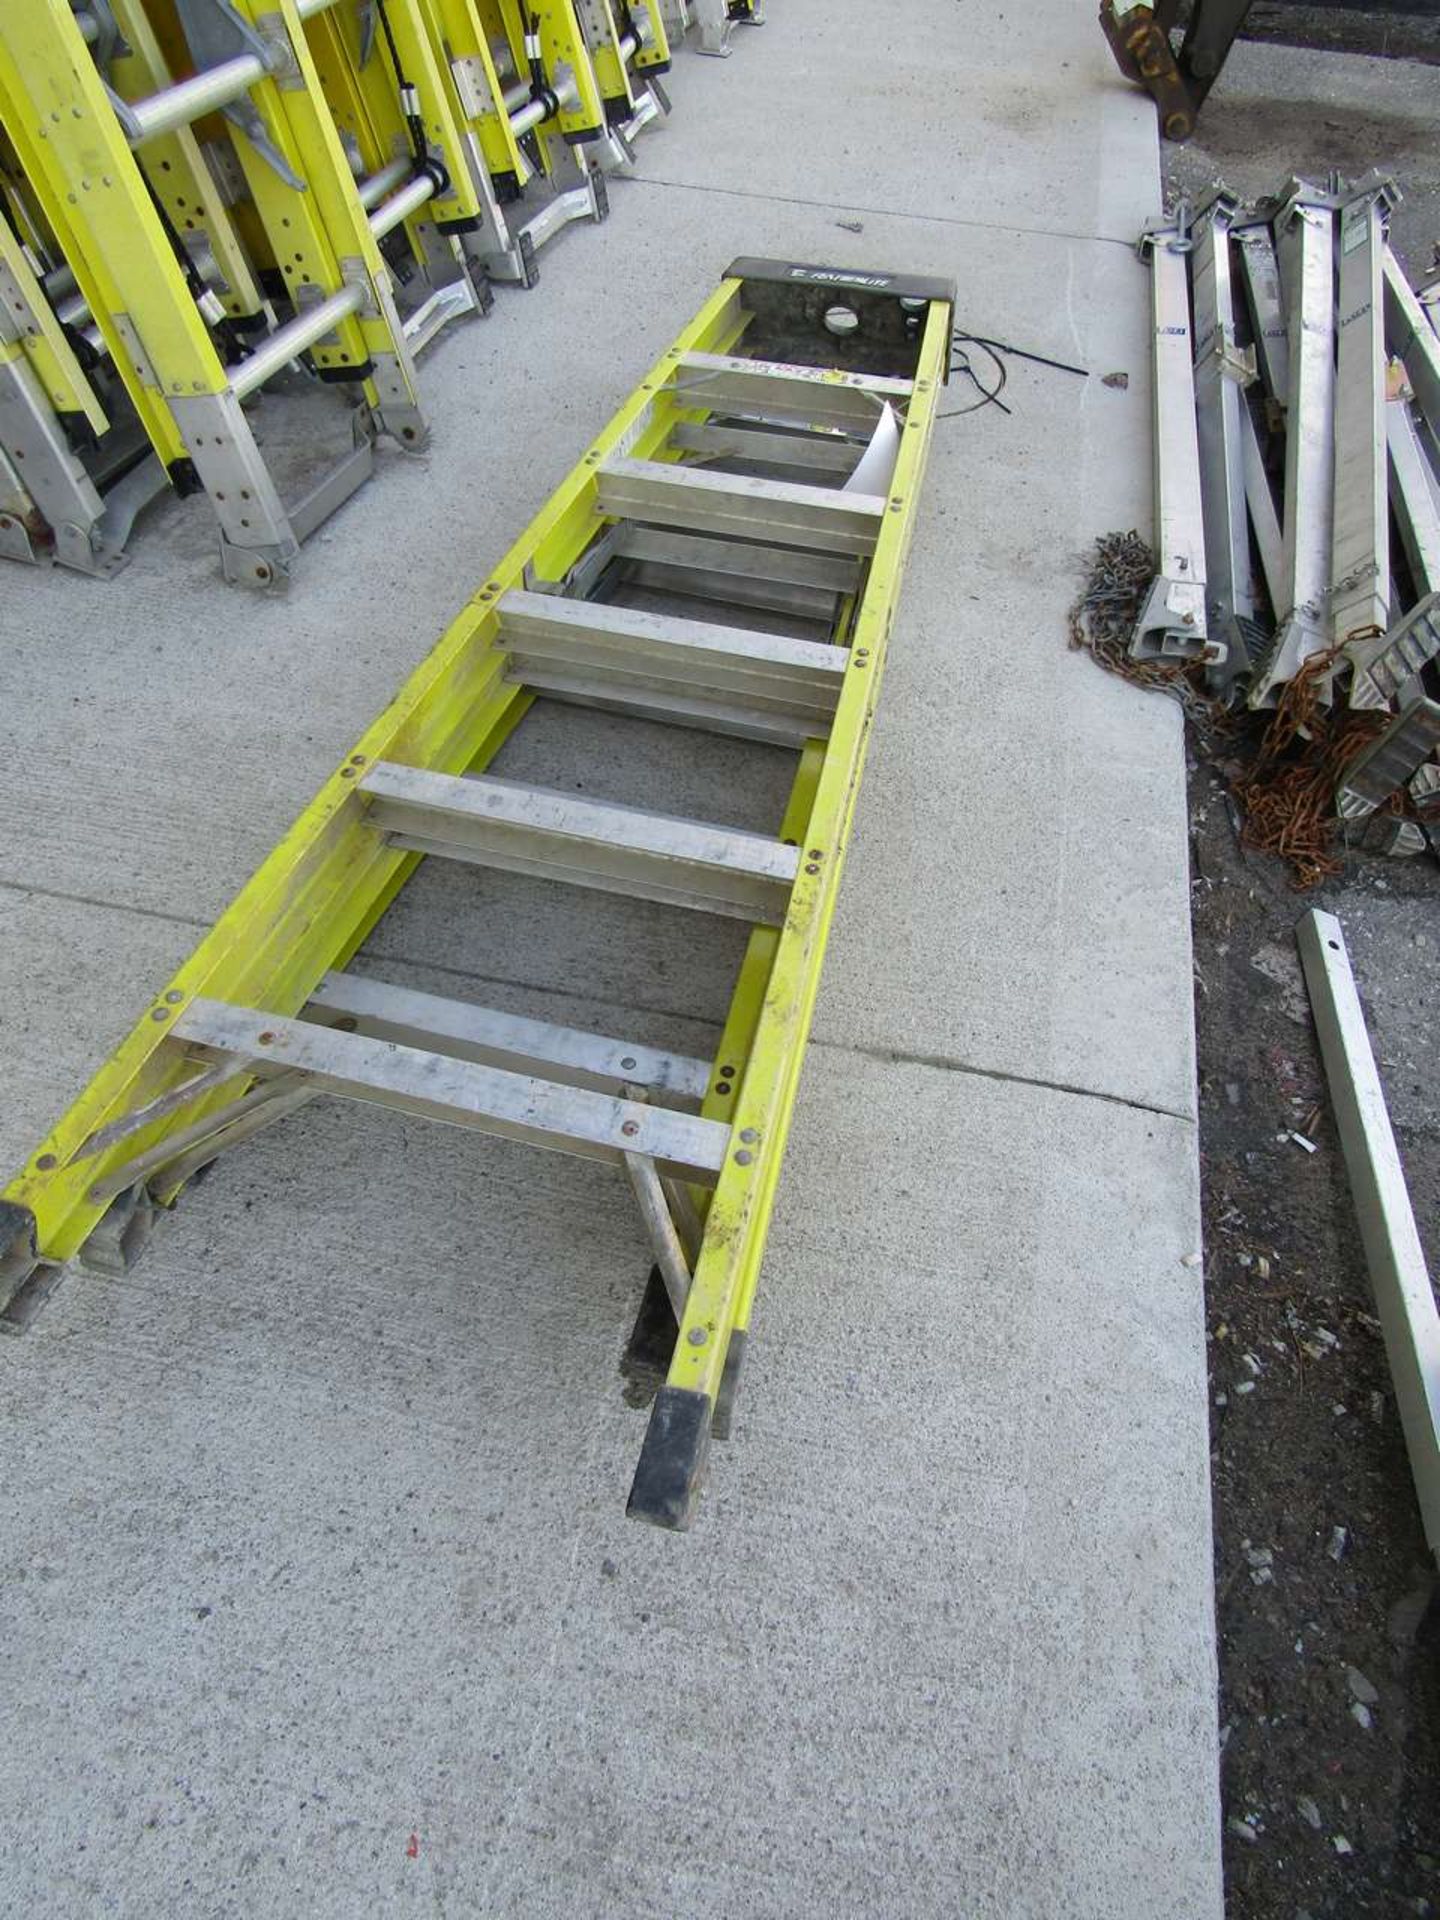 2 6' Featherlite Step Ladders